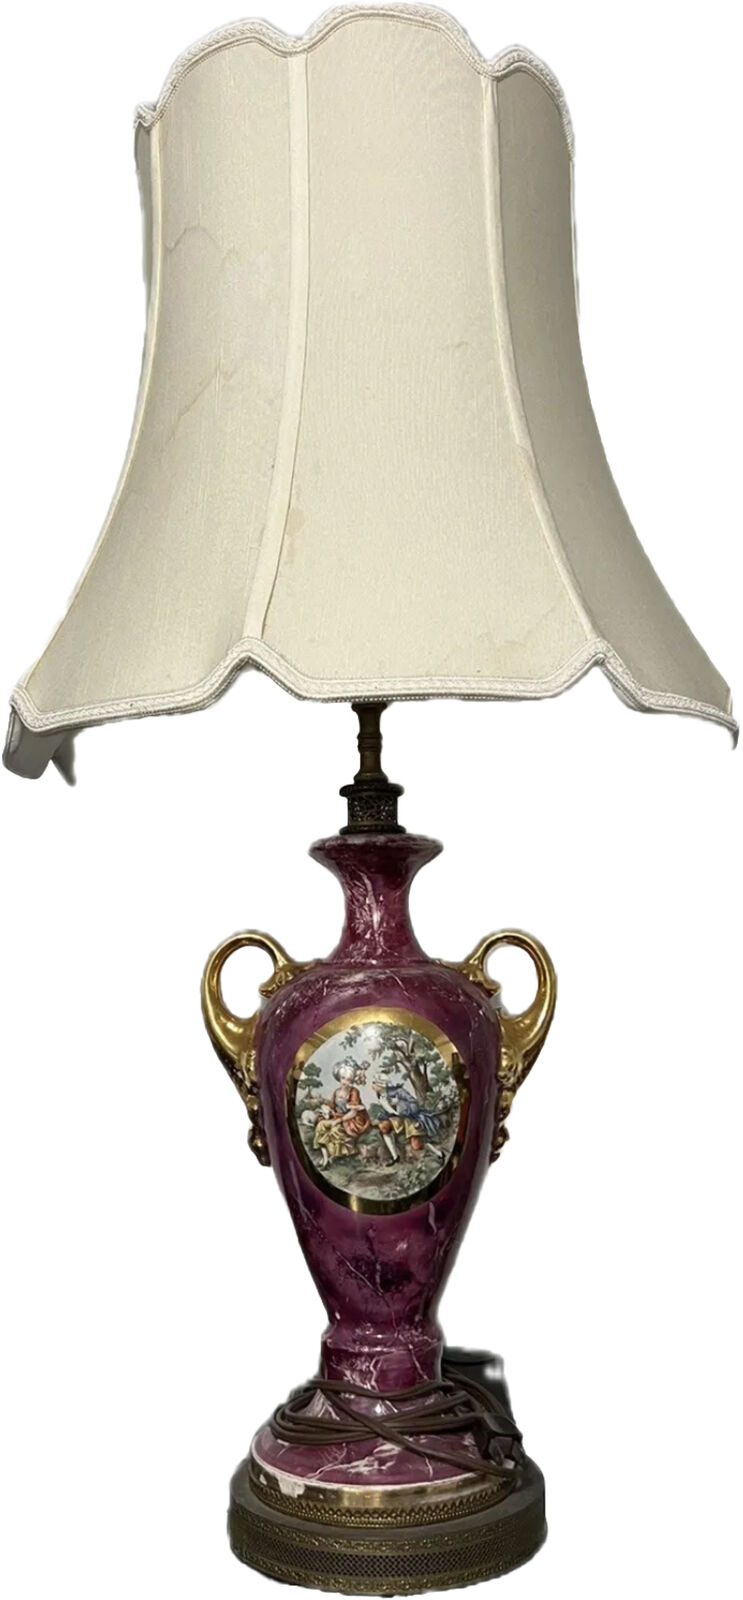 Antique George And Martha Washington Gold Trim Table Lamp 32 Inch NO LAMP SHADE